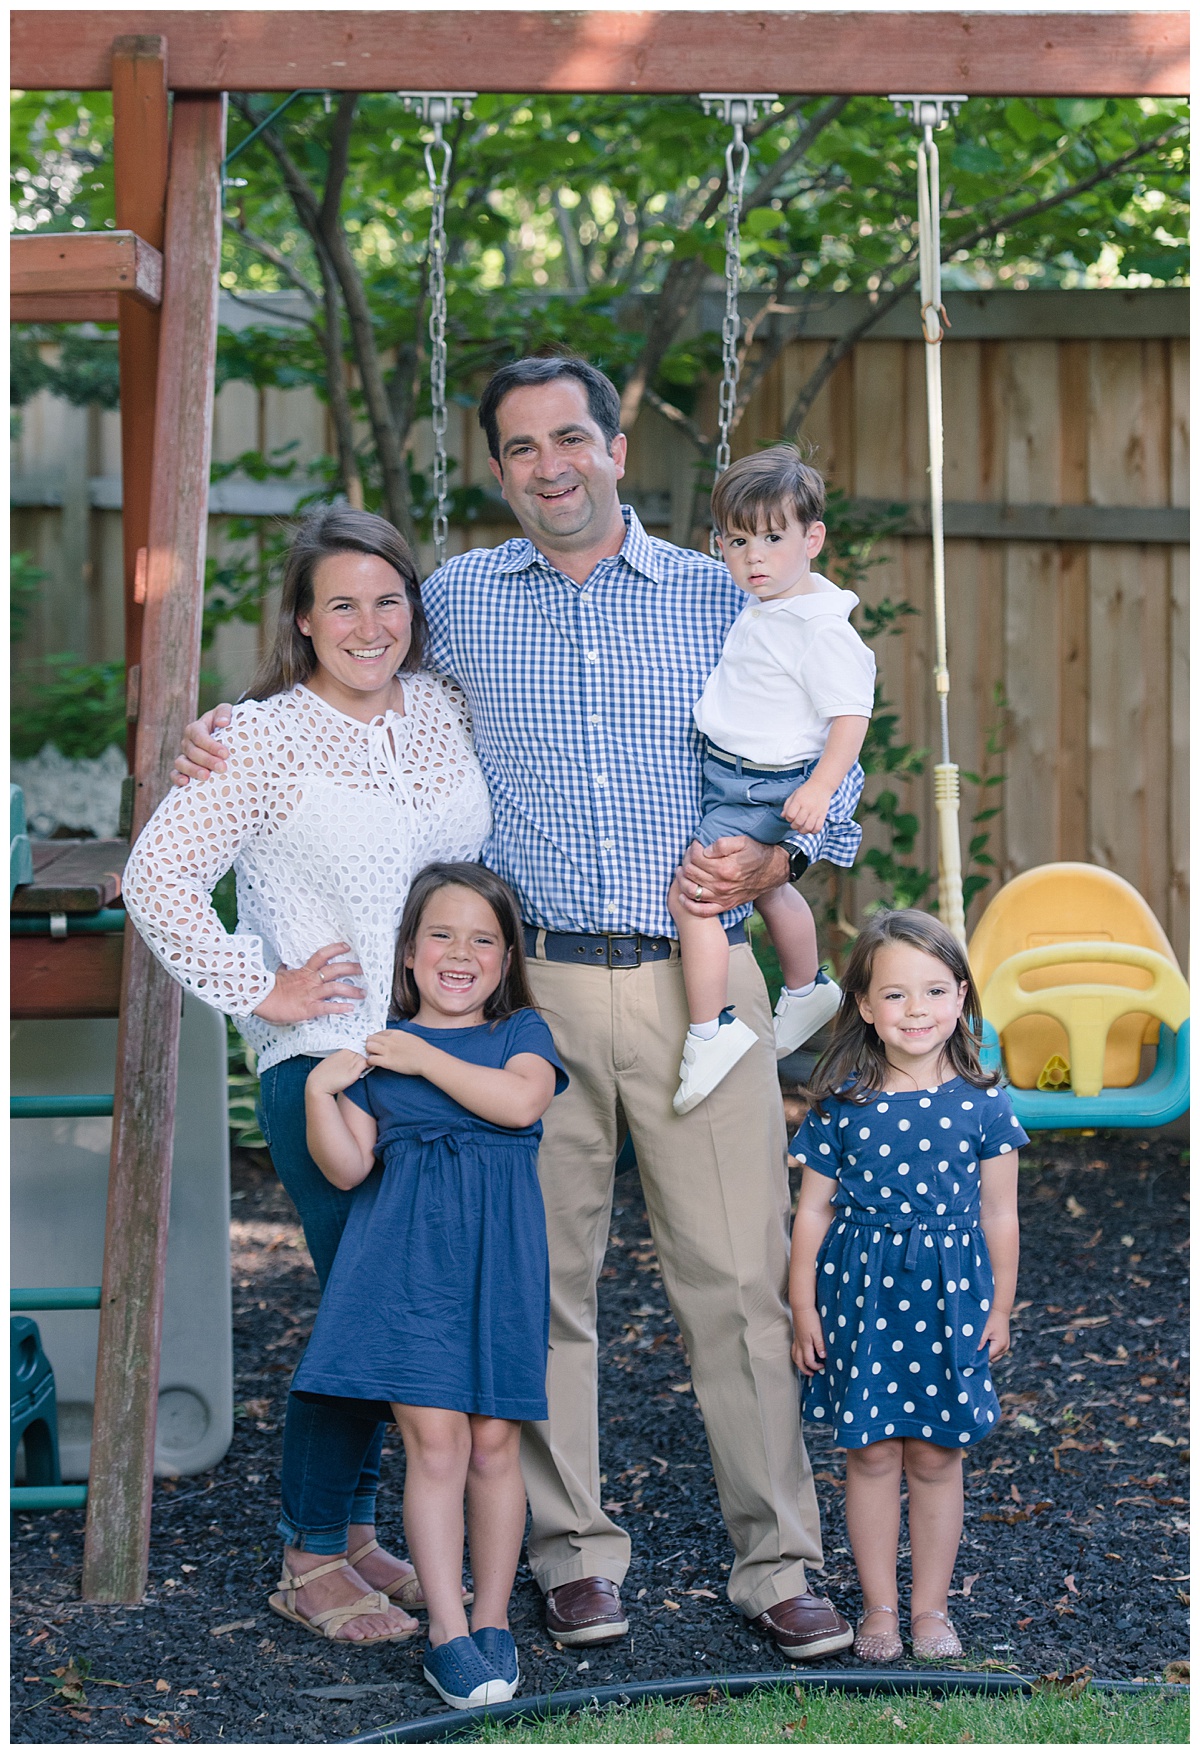 Backyard Family Portraits with swingset